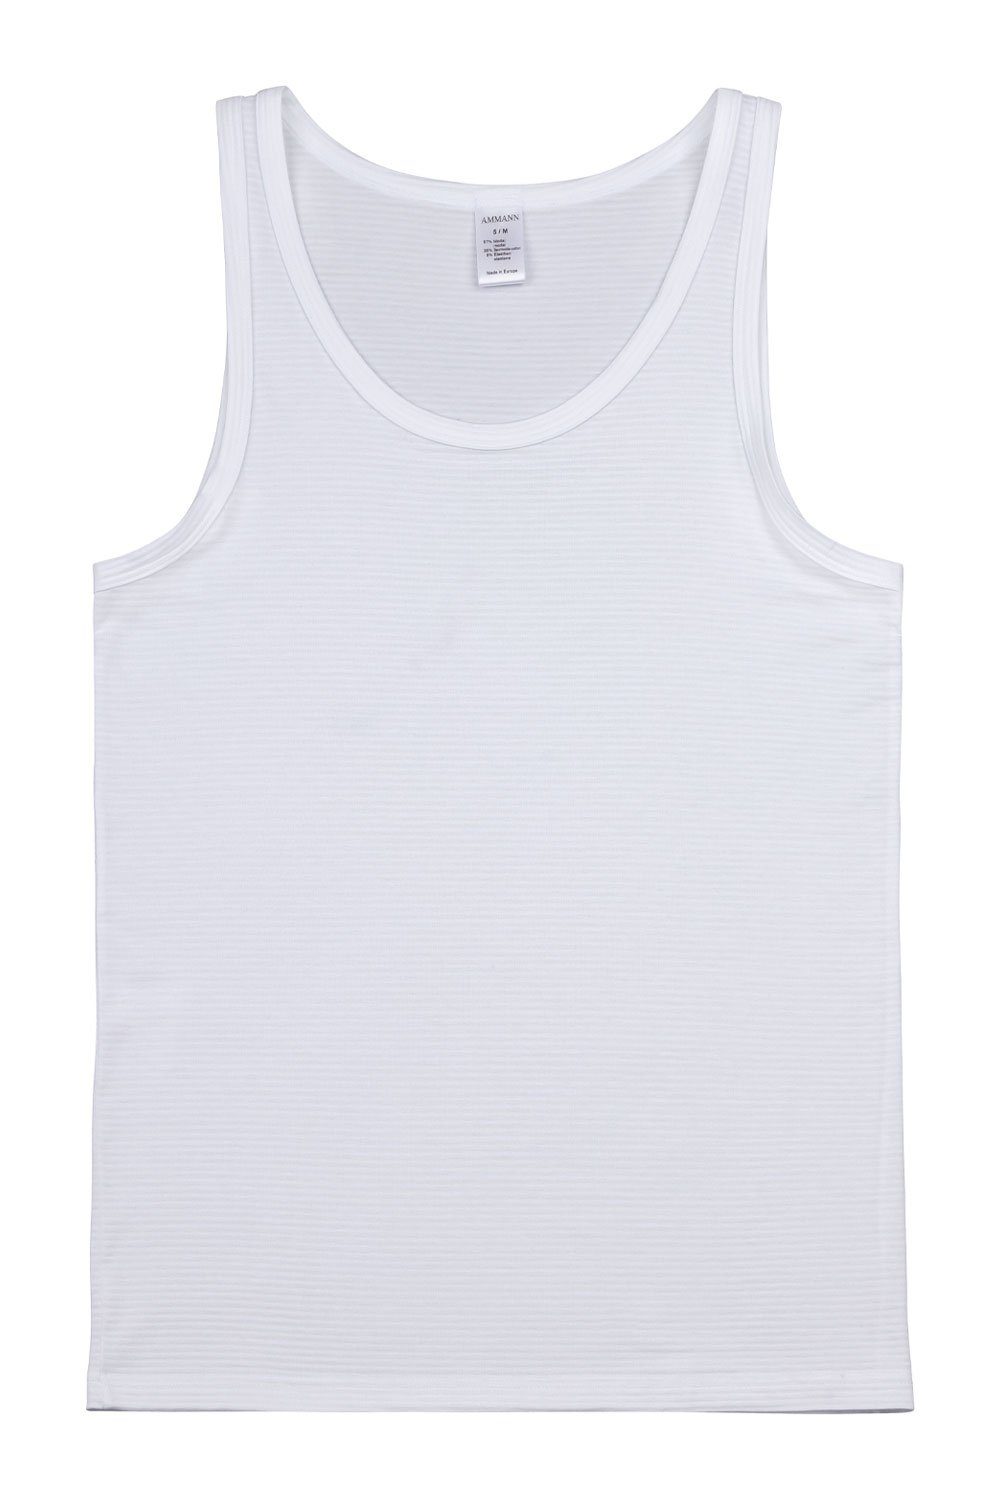 700160 Athletic-Shirt Achselhemd Ammann weiß